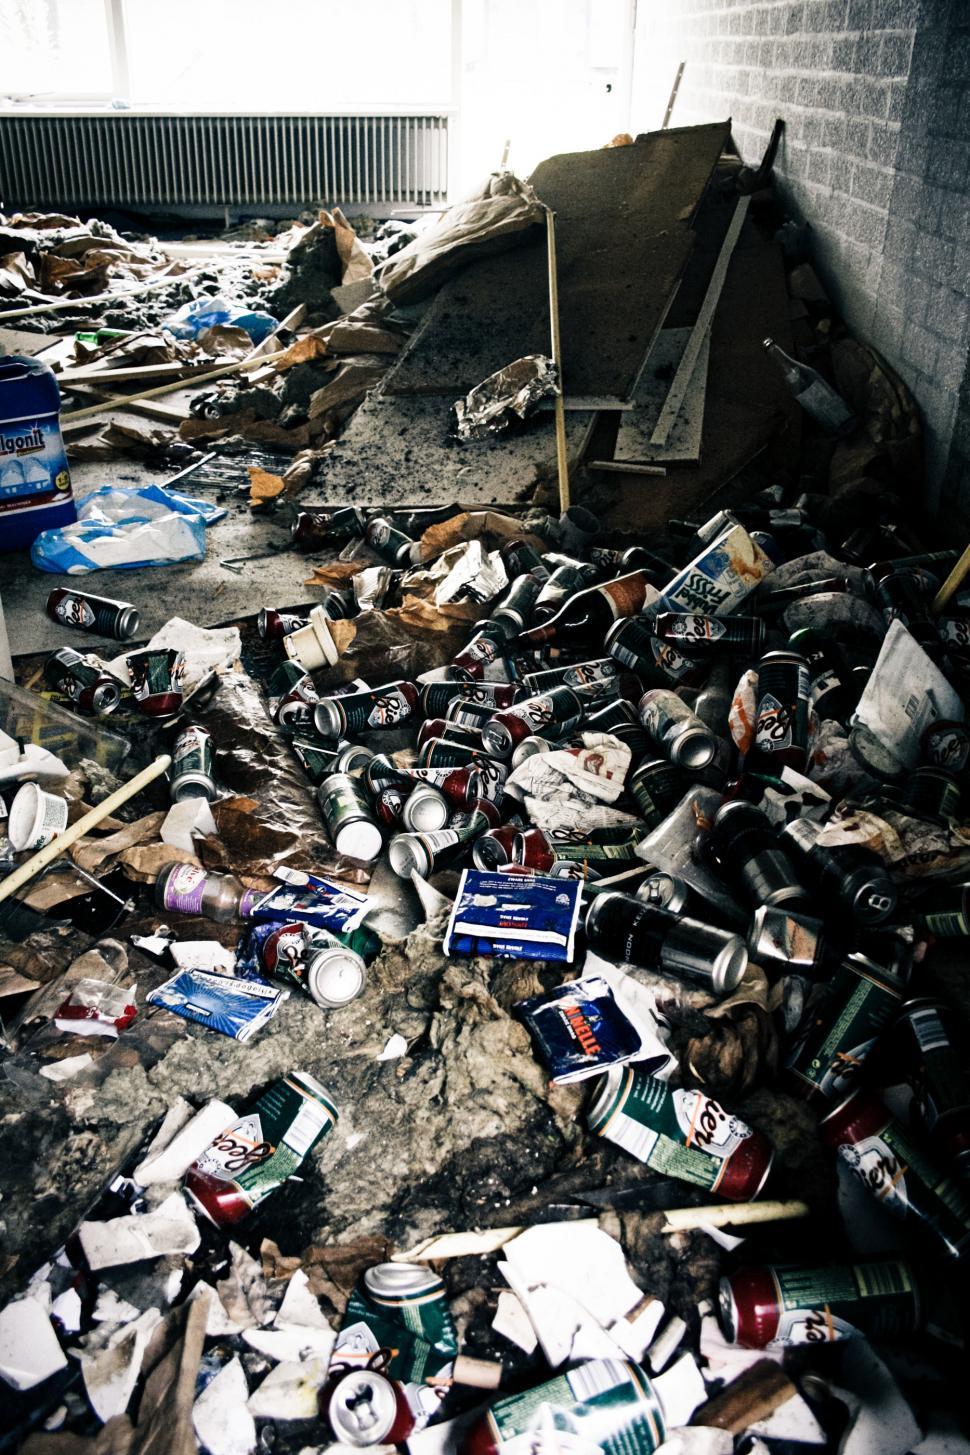 Free Image of Trash inside abandoned building 